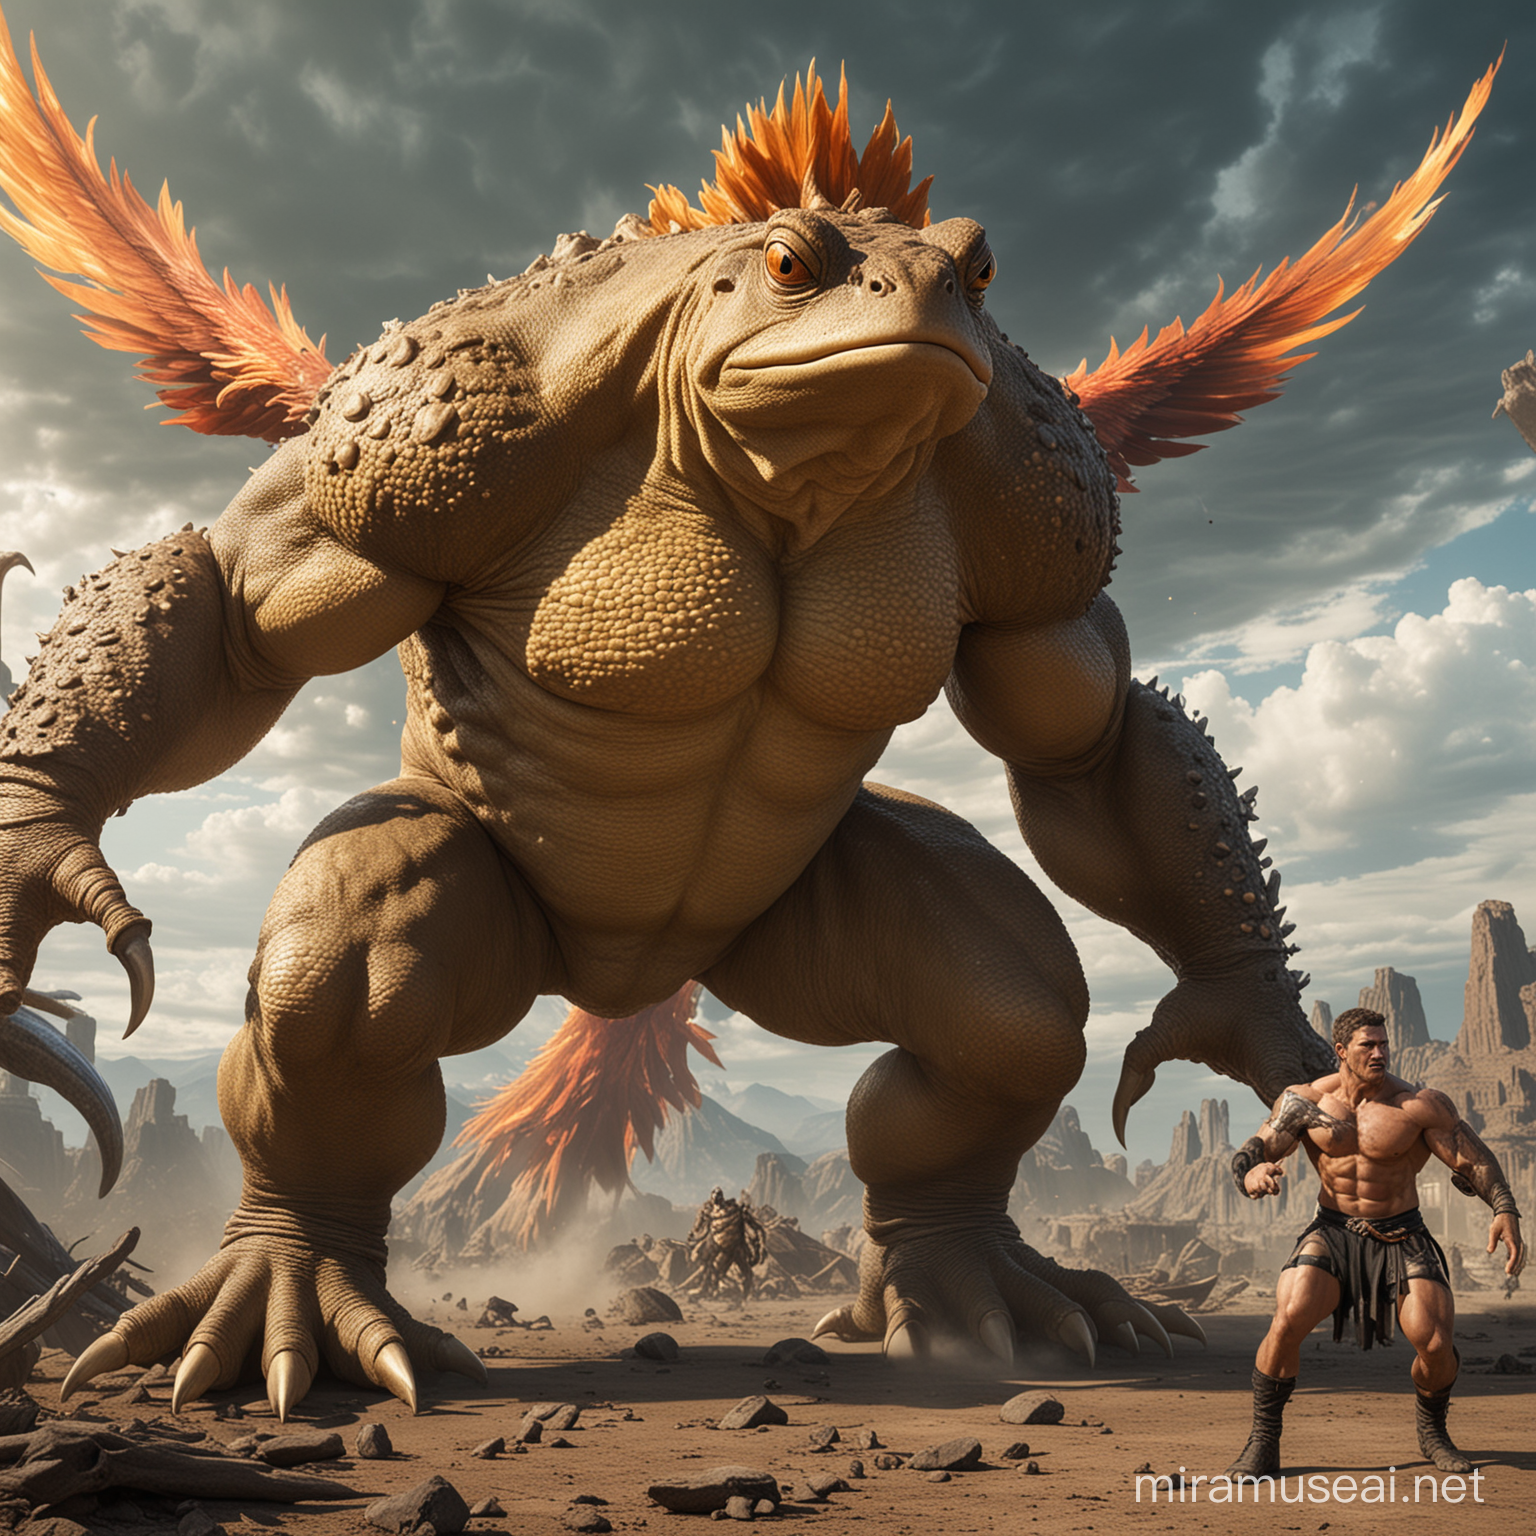 Epic Battle Massive Toad Confronts Phoenix in Titan Clash